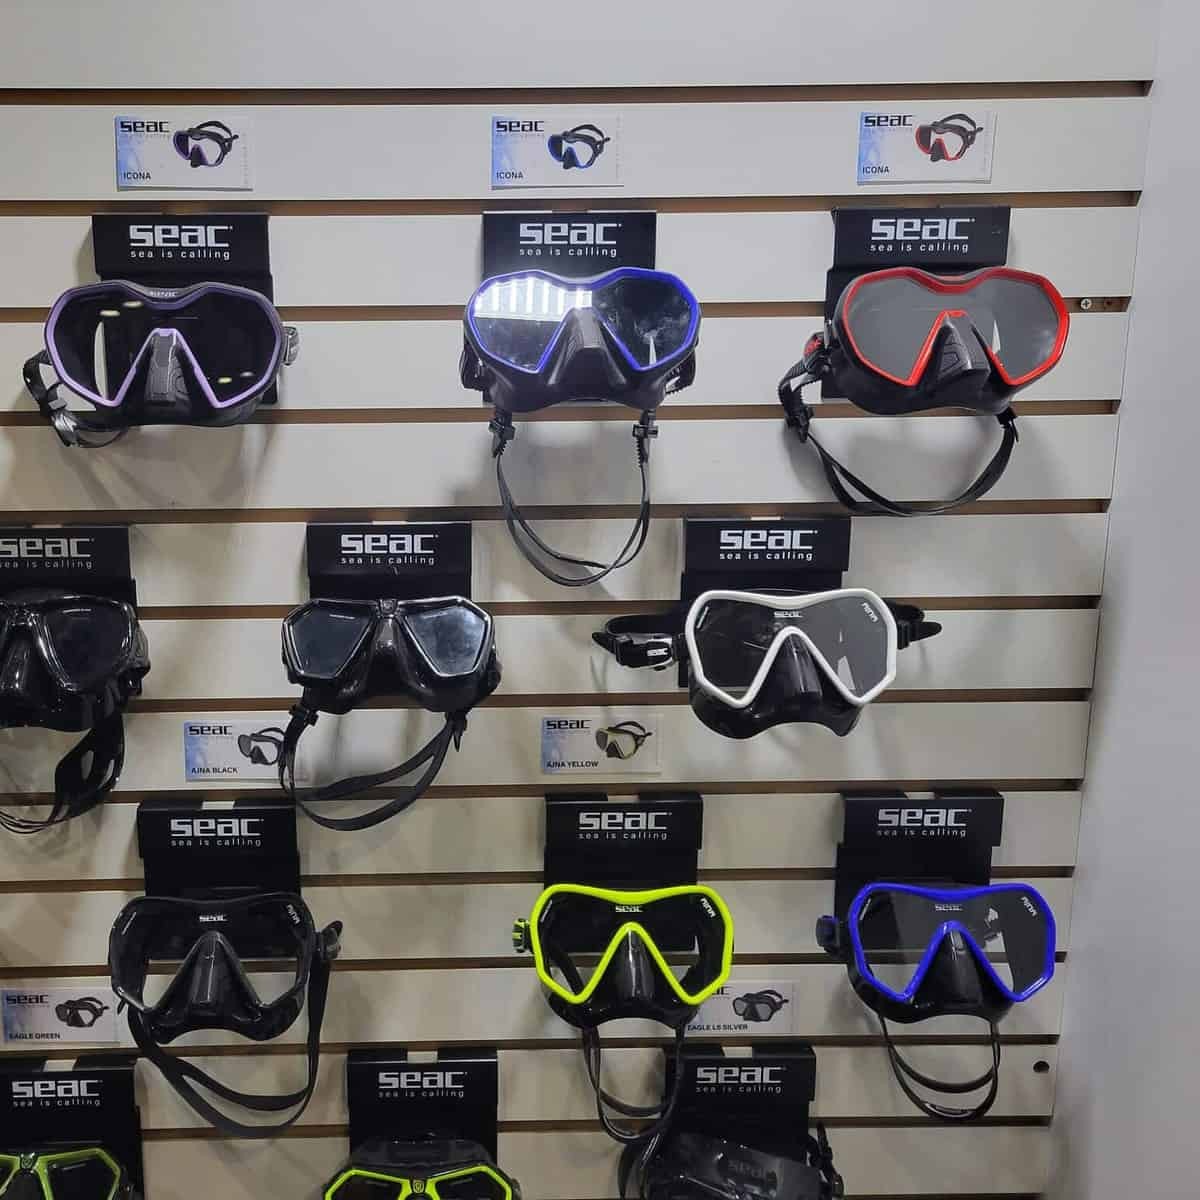 New SEAC dive masks at DEMA Show 2022